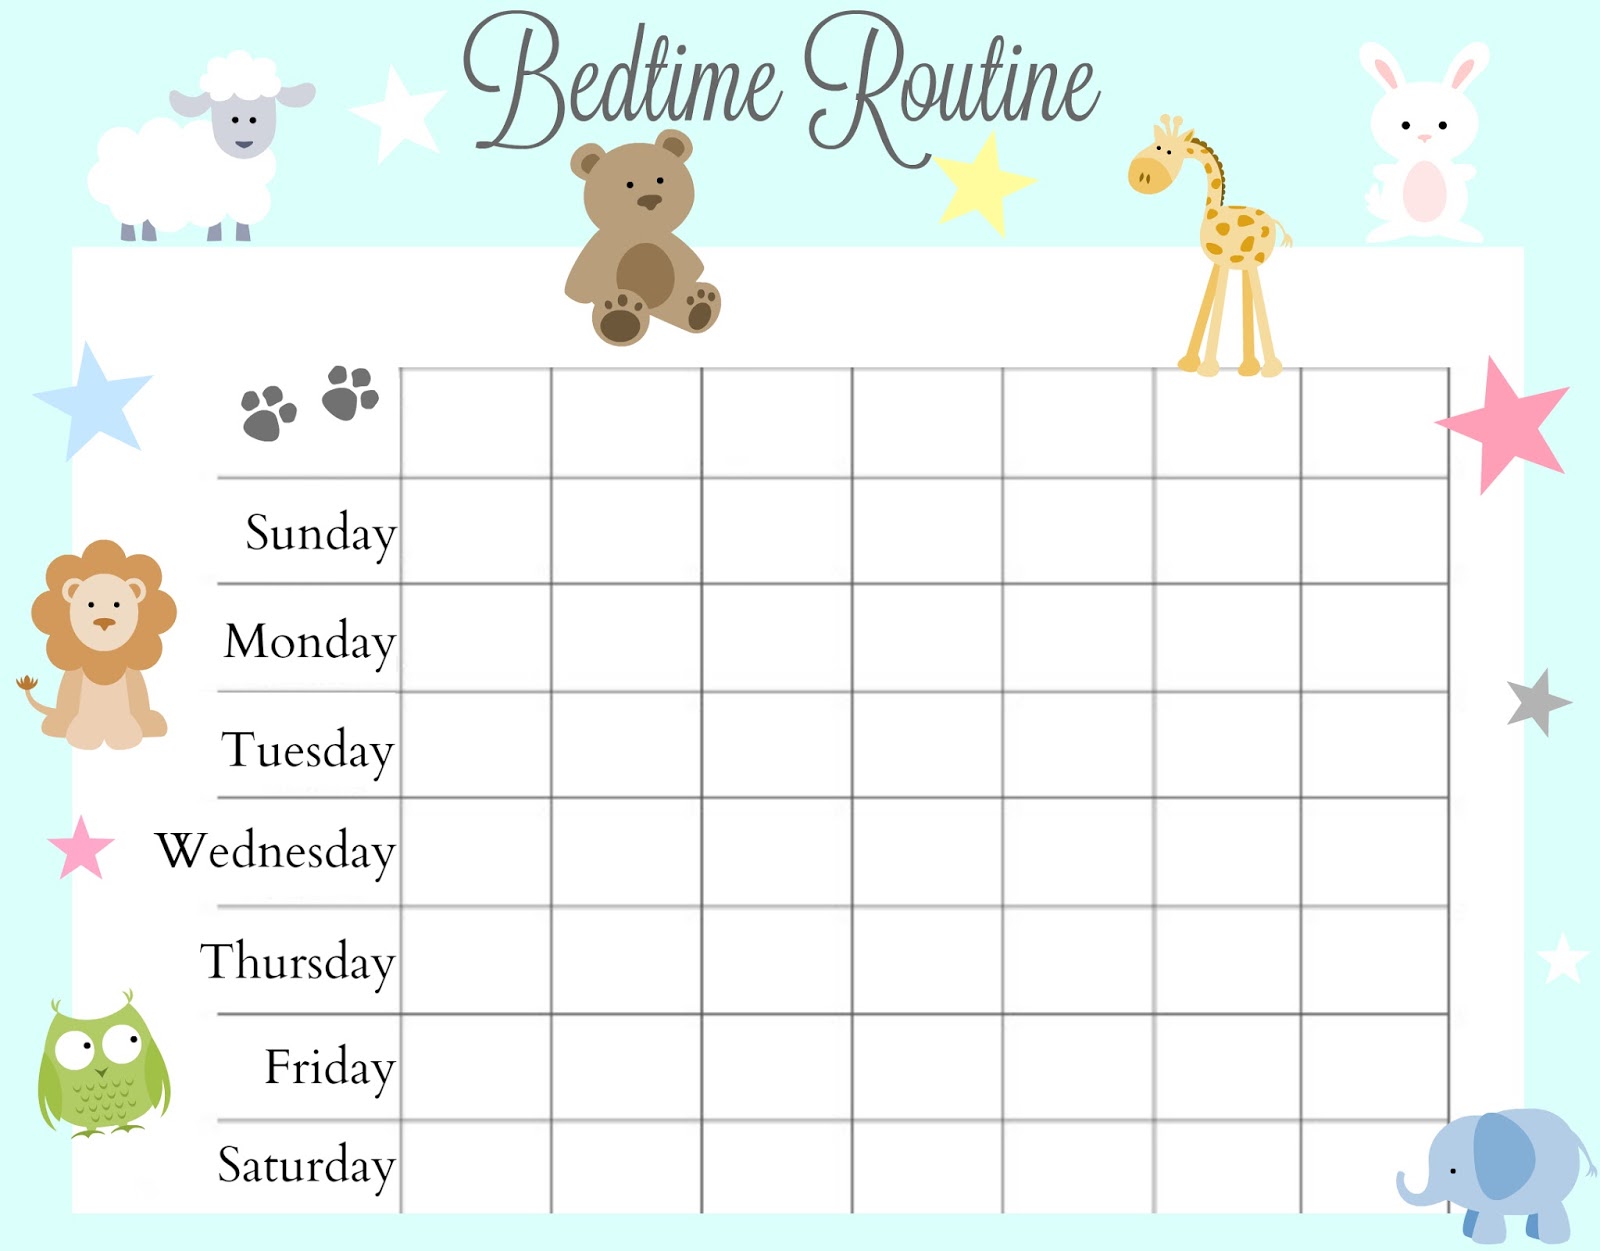 Bedtime Routine Chart Free Printable - Printable Templates